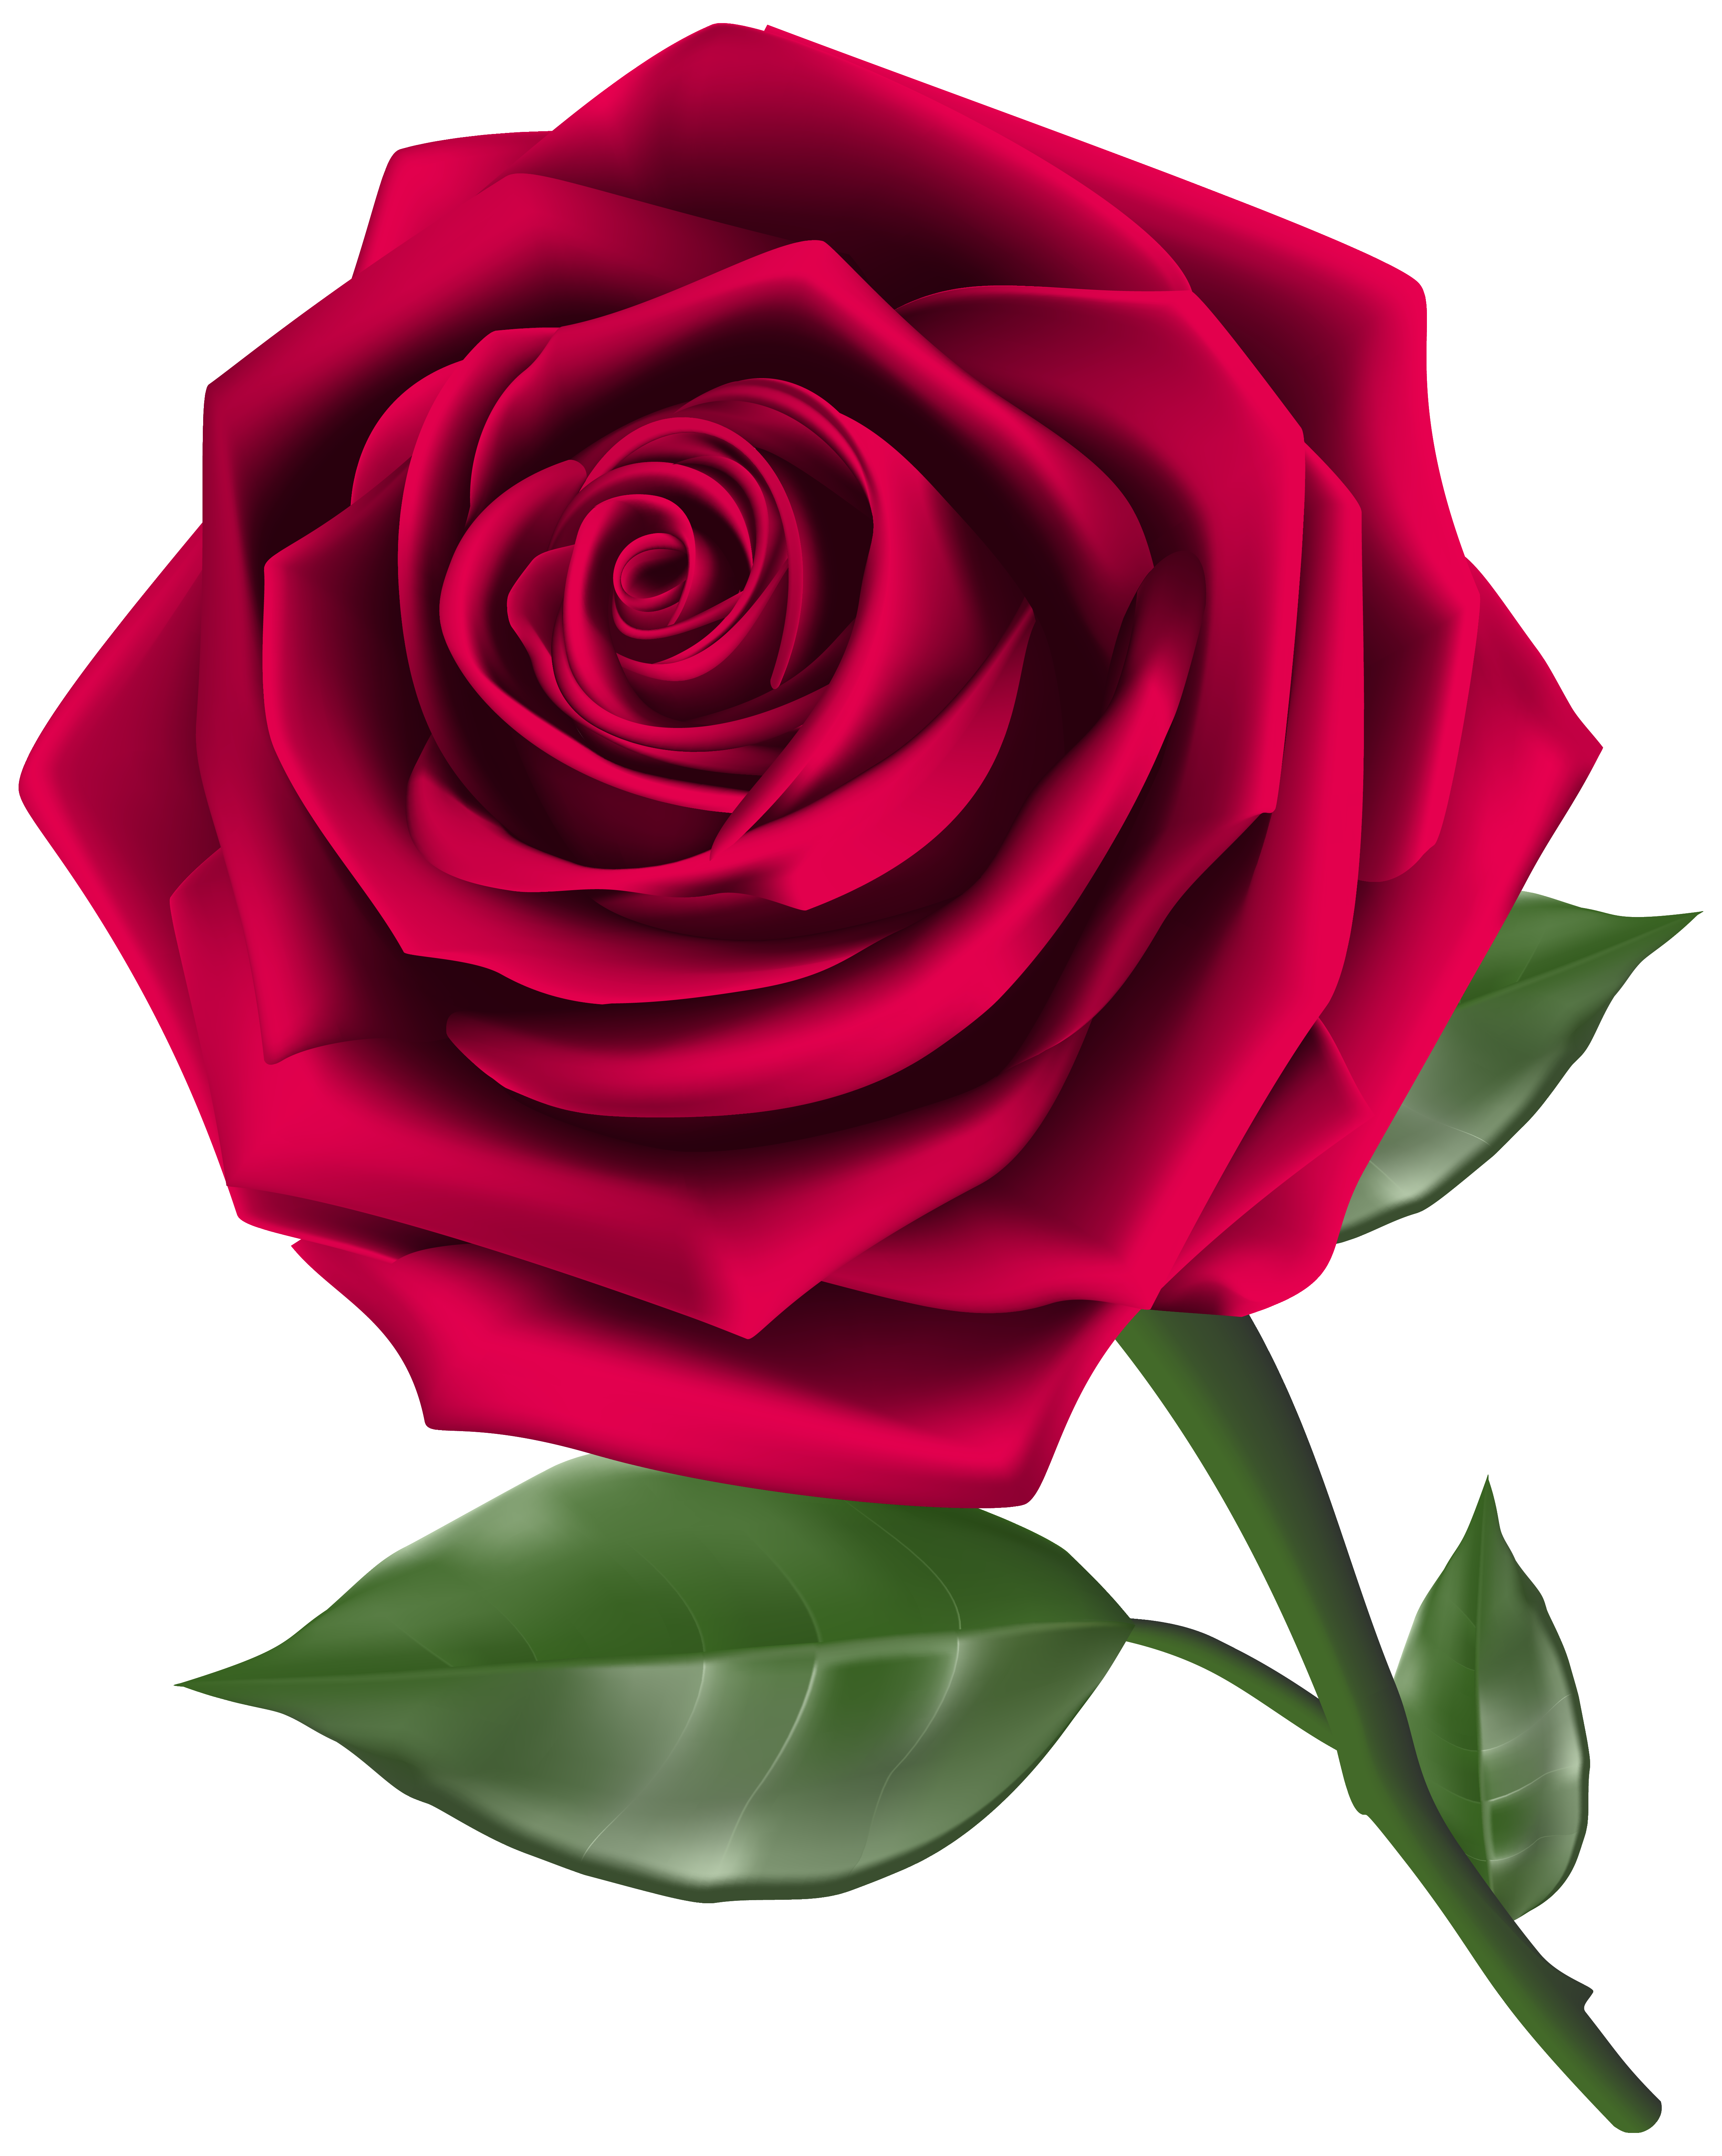 rose clip art sms - photo #46